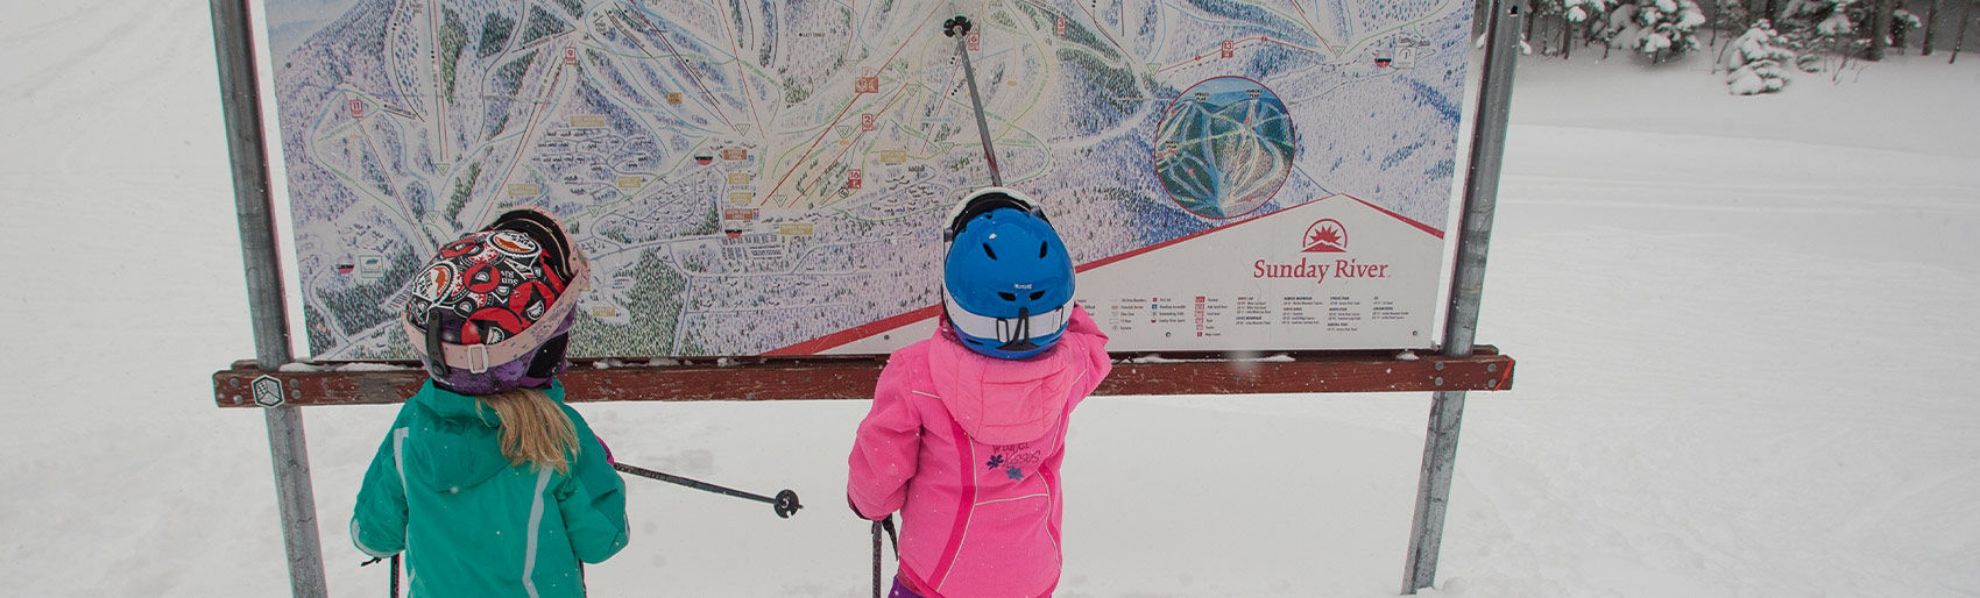 Kids looking at a Ski trail map